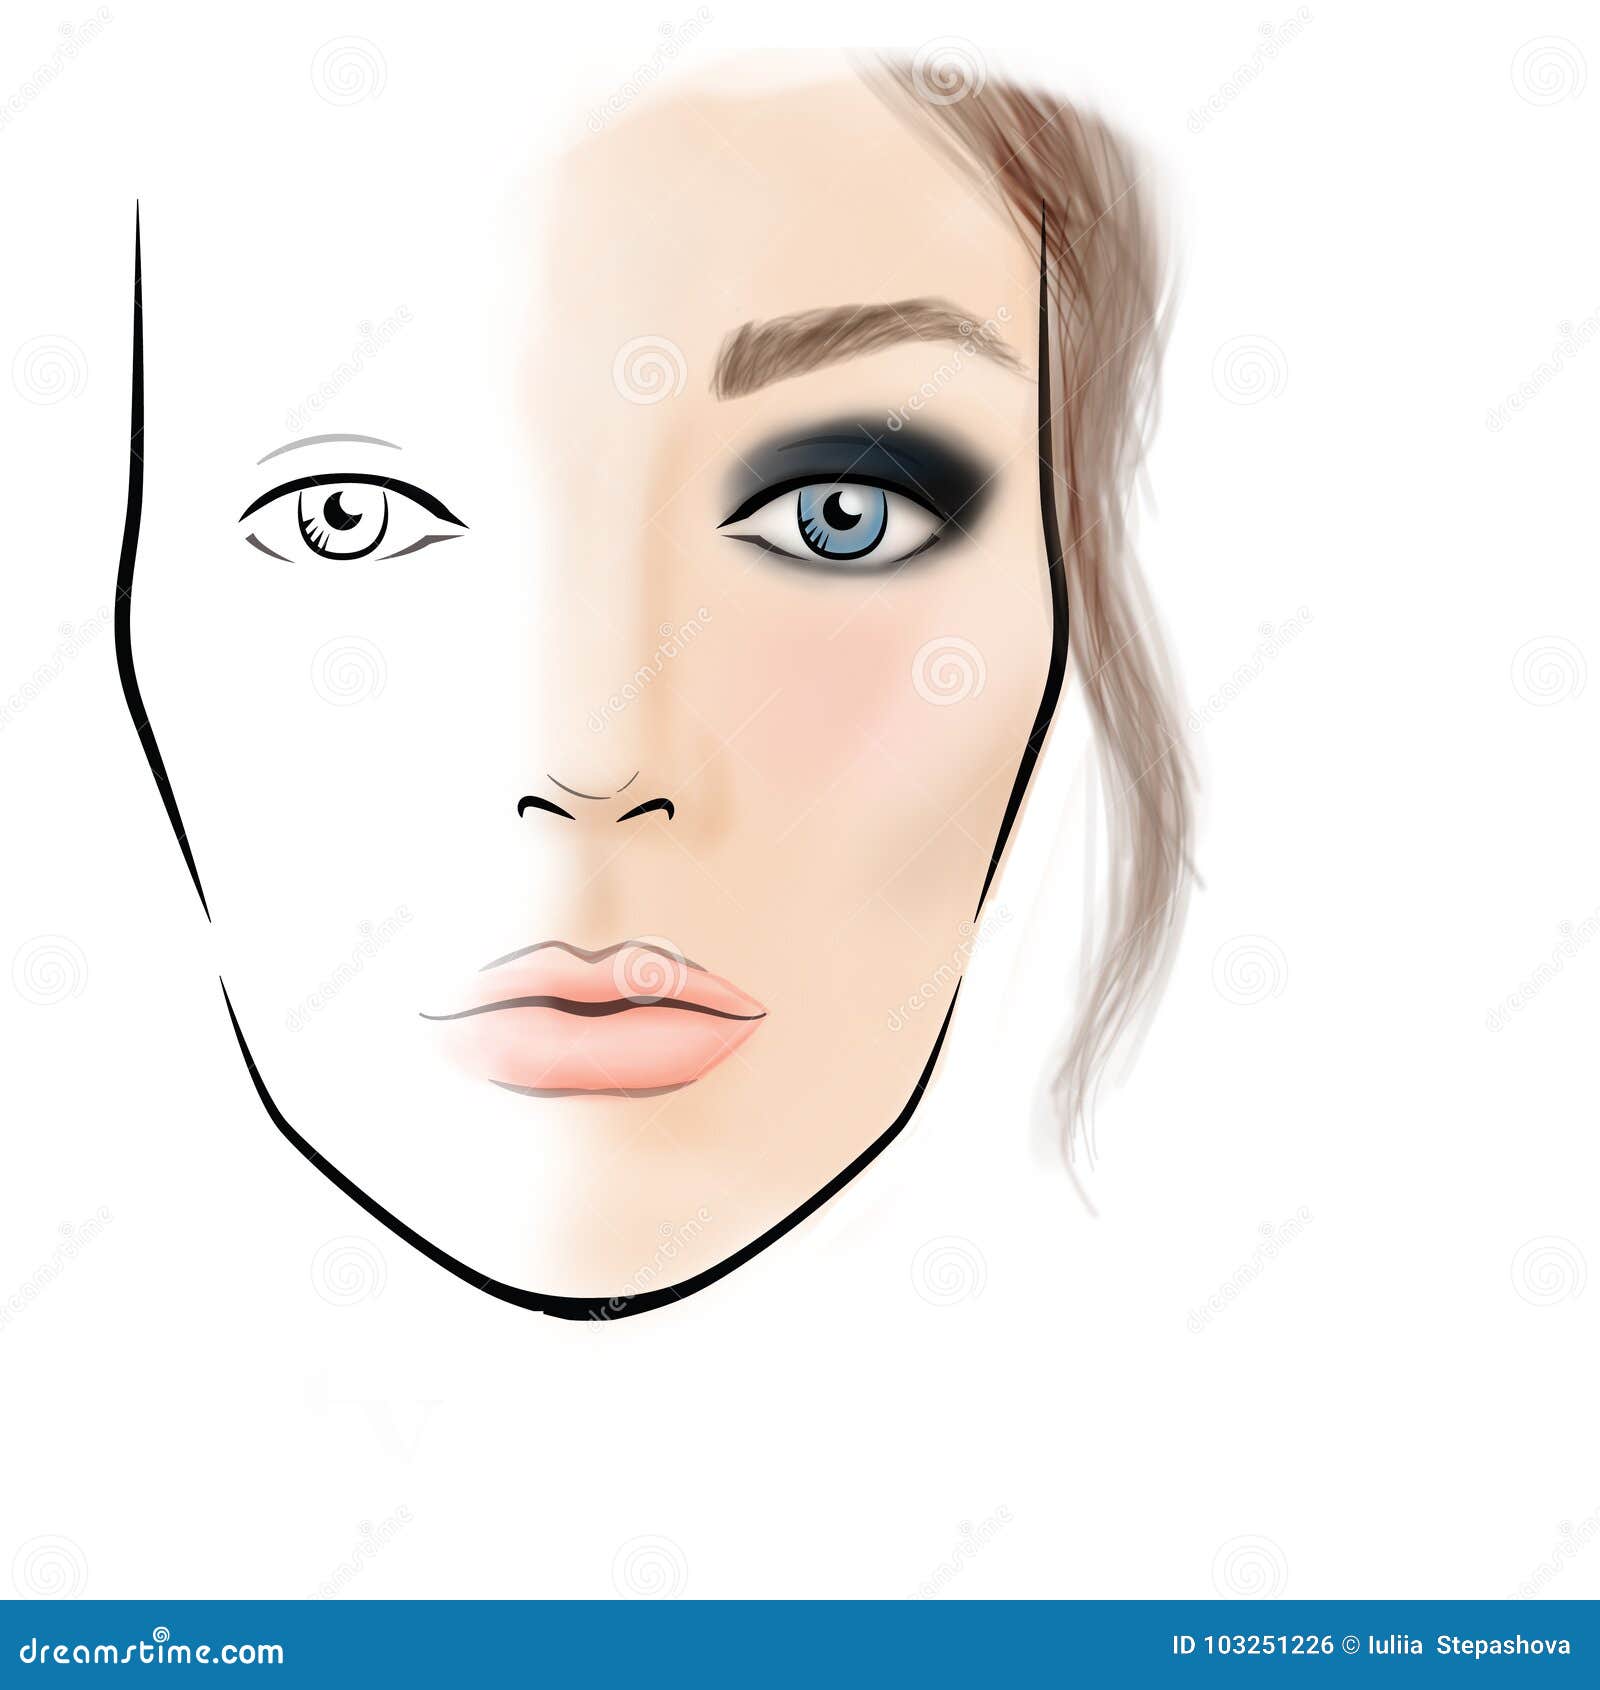 face-chart-makeup-artist-blank-template-stock-illustration